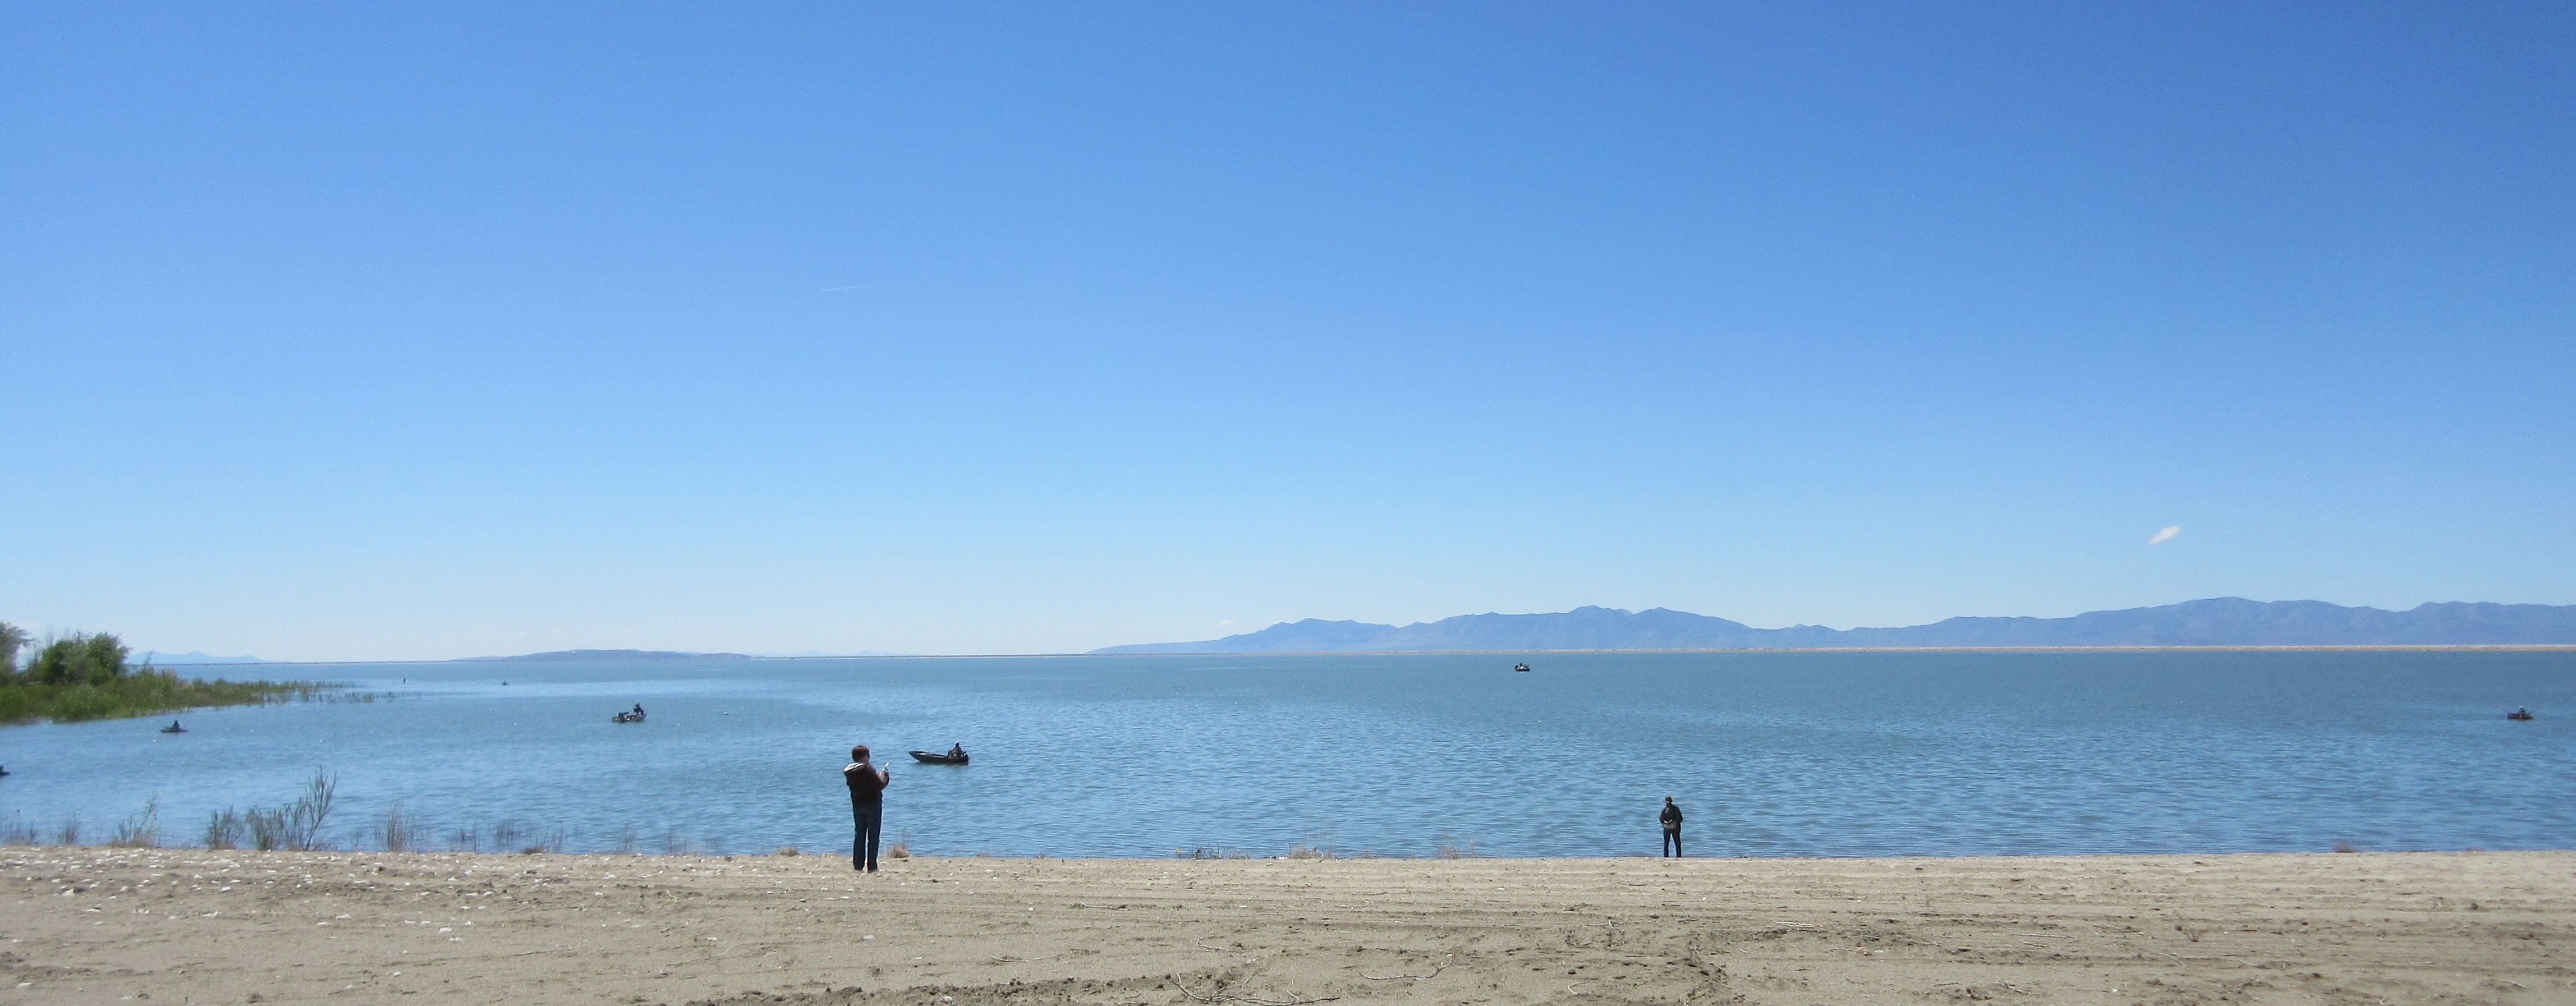 Willard Bay of the Great Salt Lake